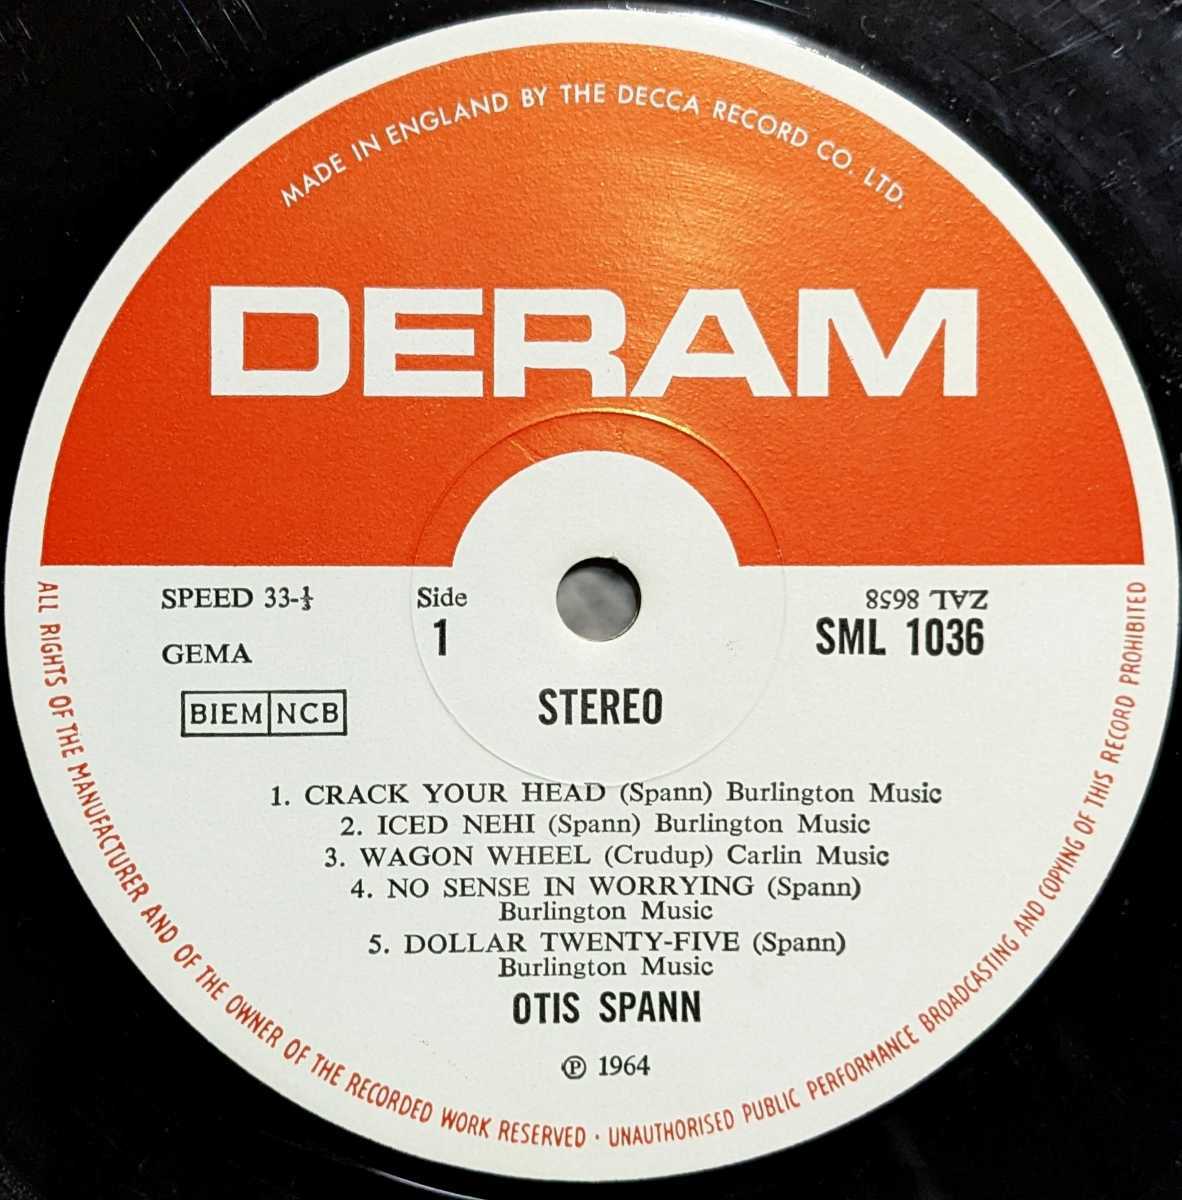 Otis Spann-Cracked Soanner Head* britain Deram Orig. stereo record /mato1